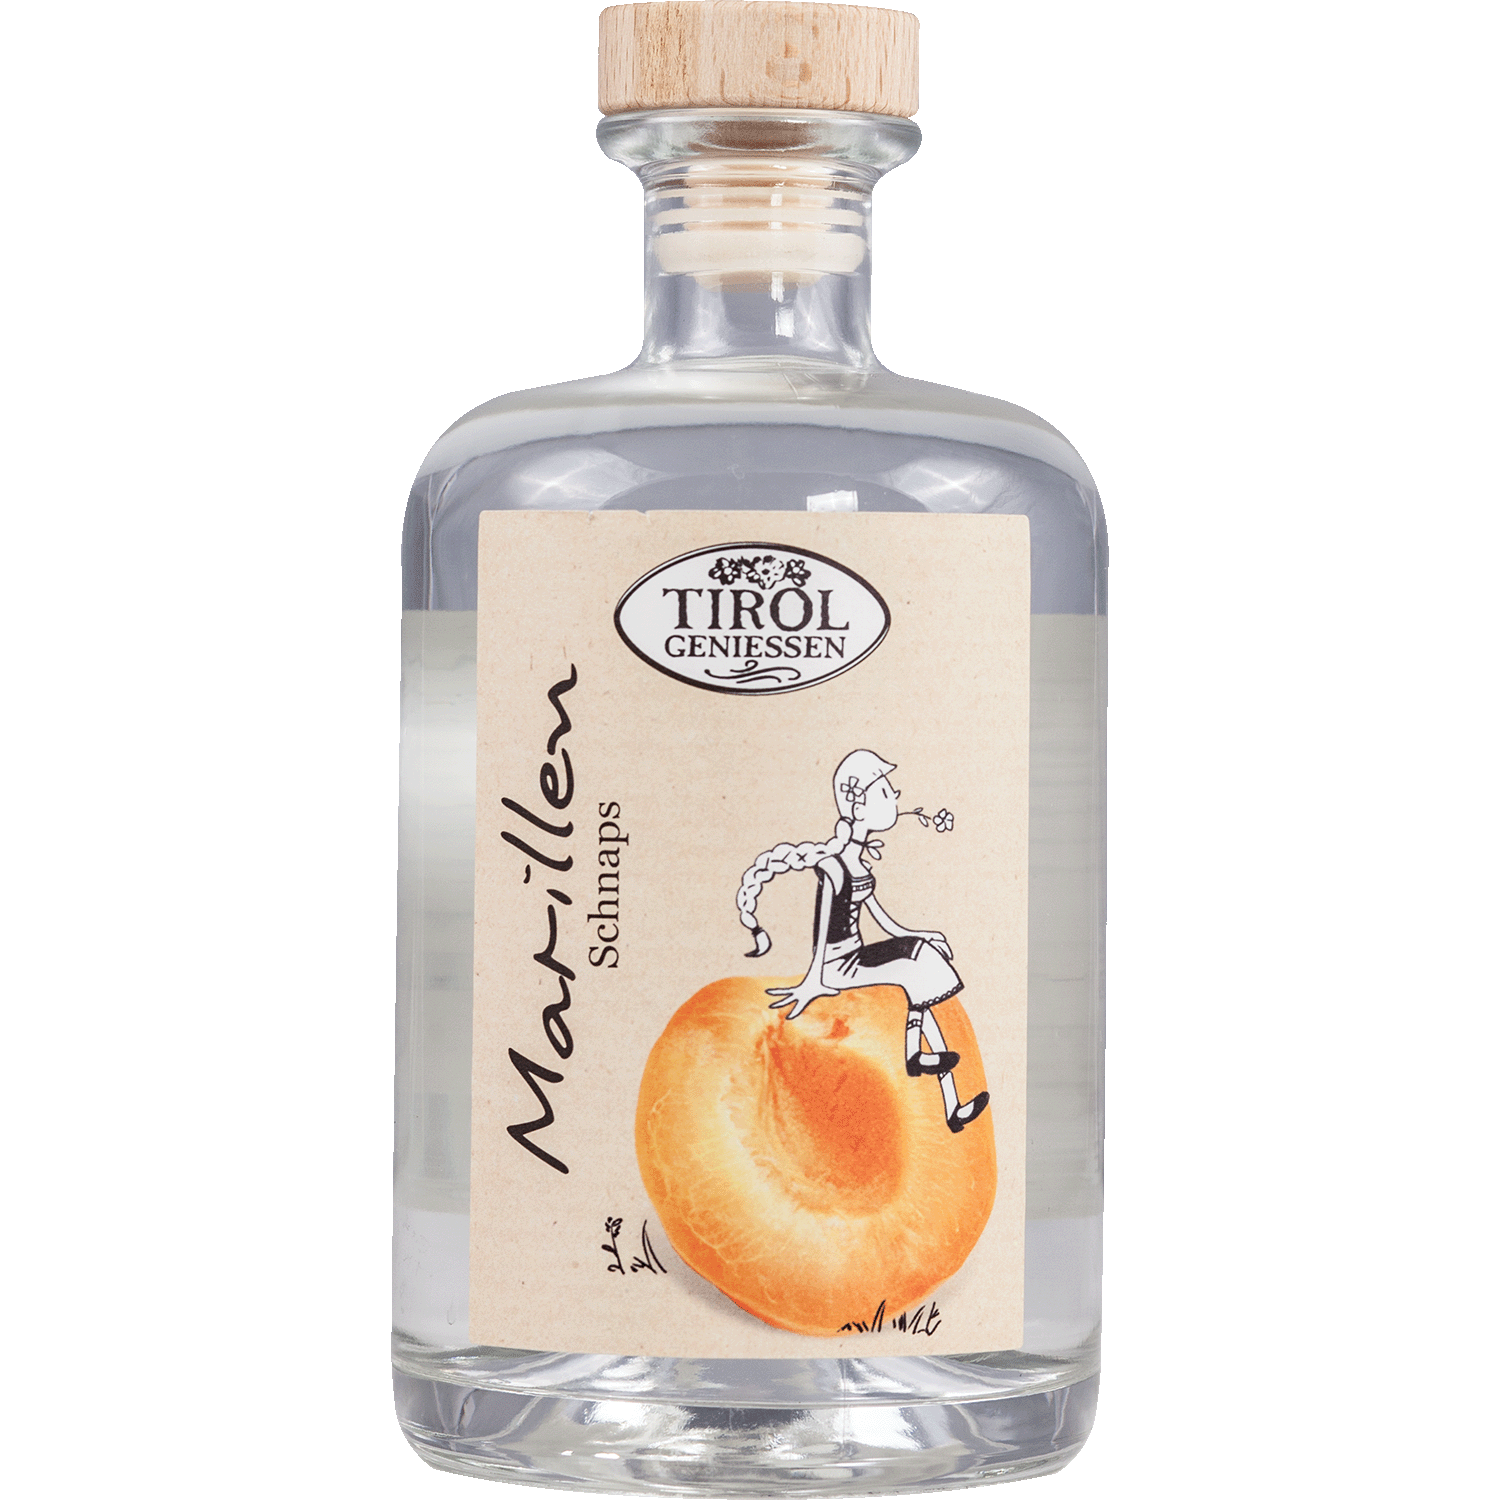 Tyrolean Apricot Schnapps in gift bottle from Austria from Tirol Geniessen